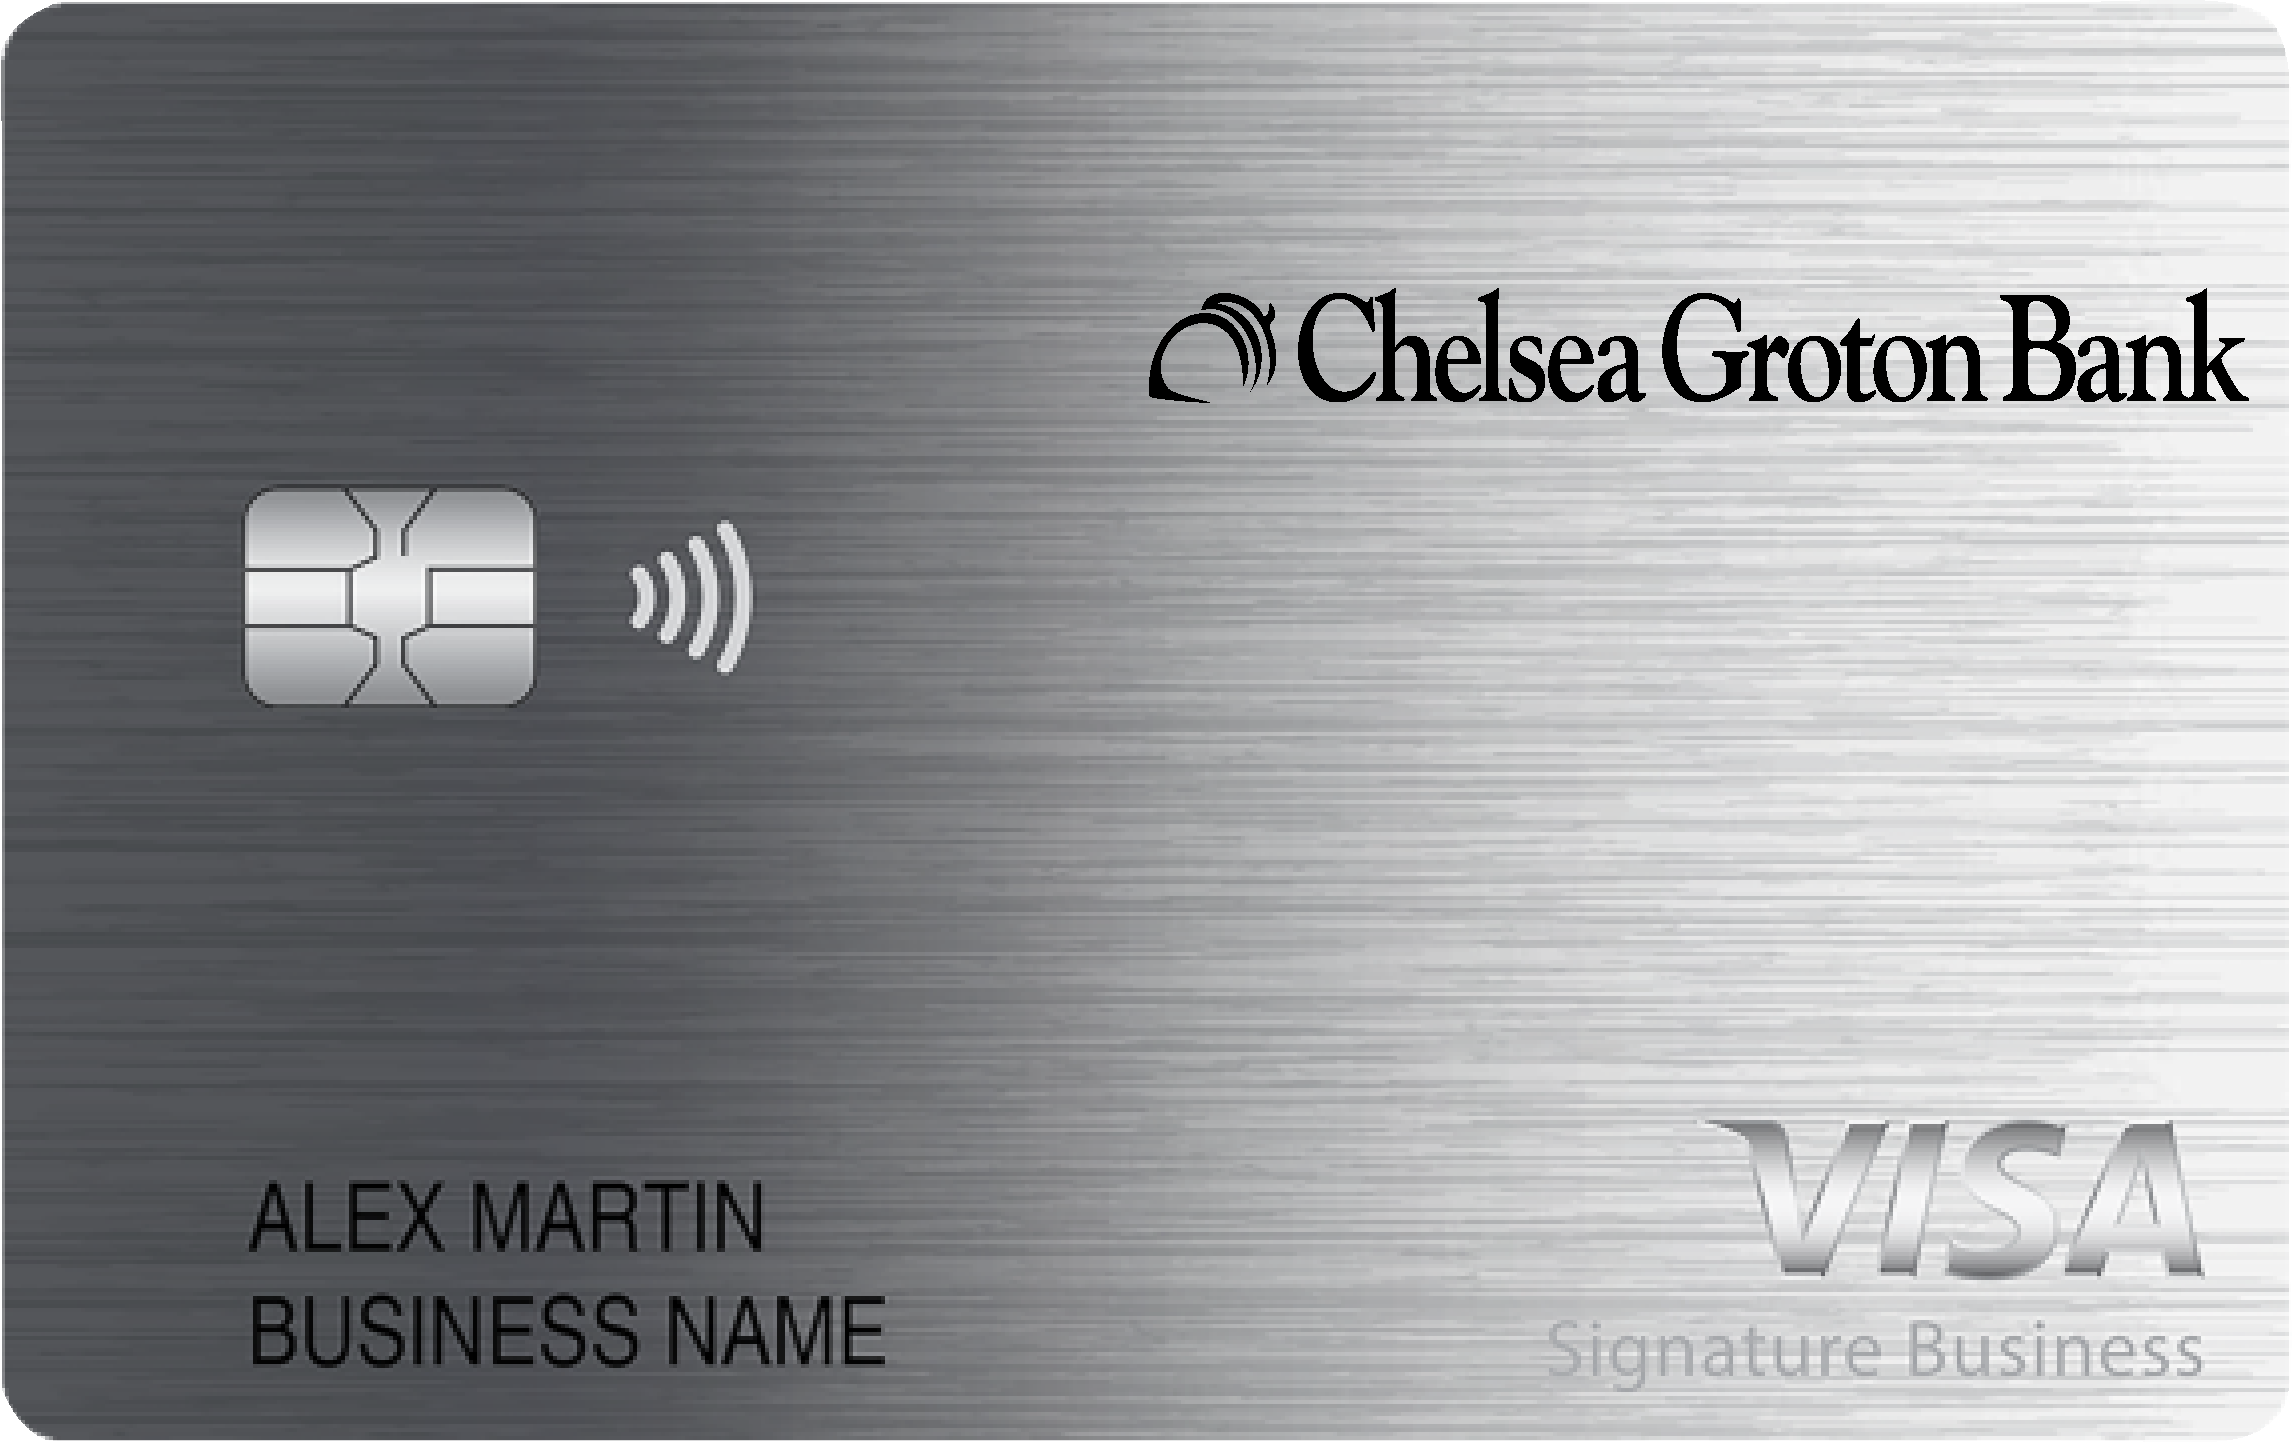 Chelsea Groton Bank Smart Business Rewards Card